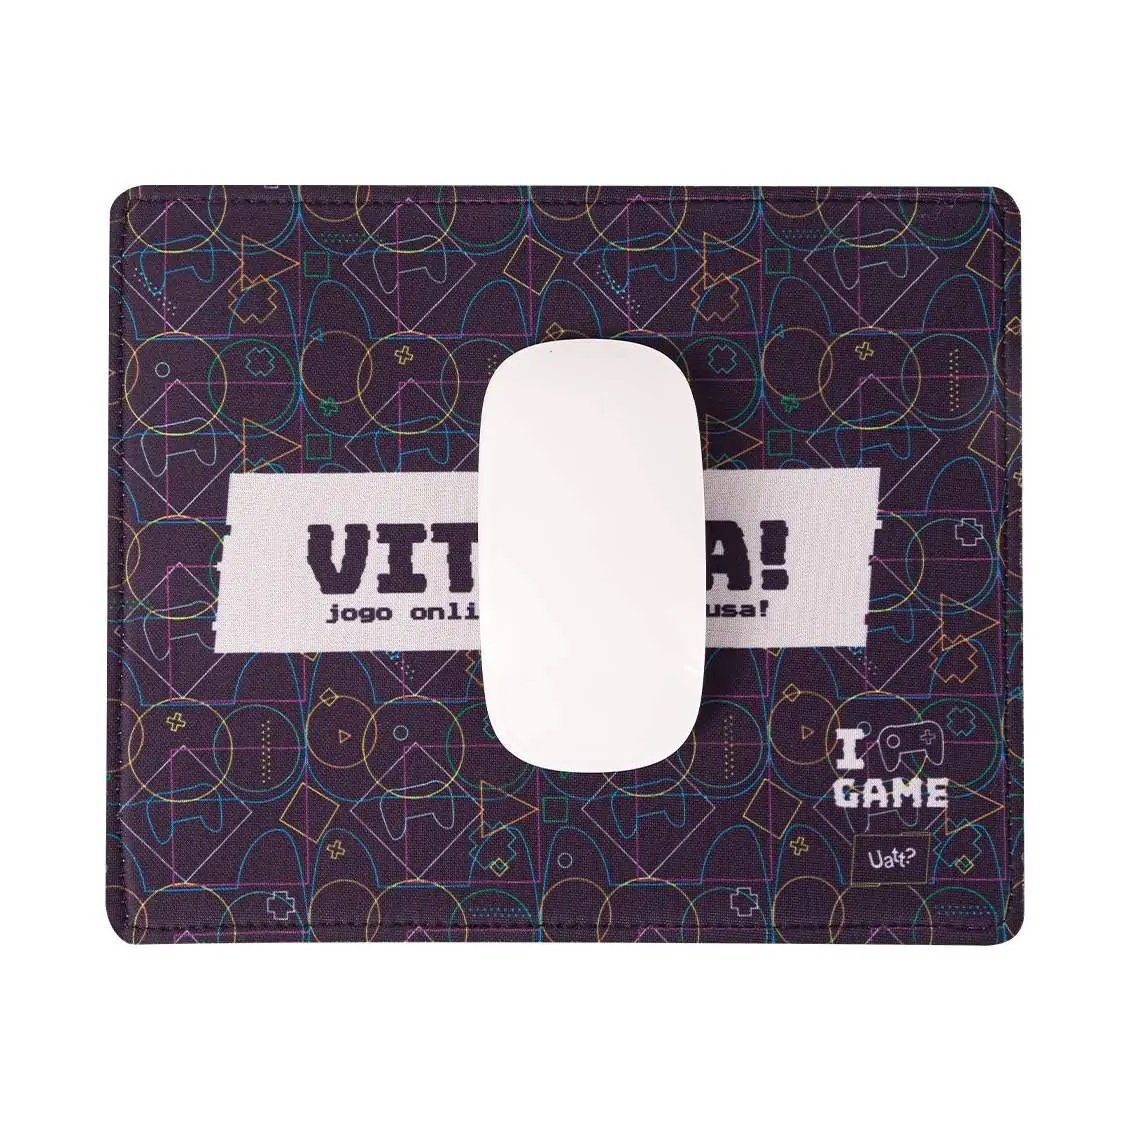 Mouse Pad Soft - Game Geek - Uatt? - 2